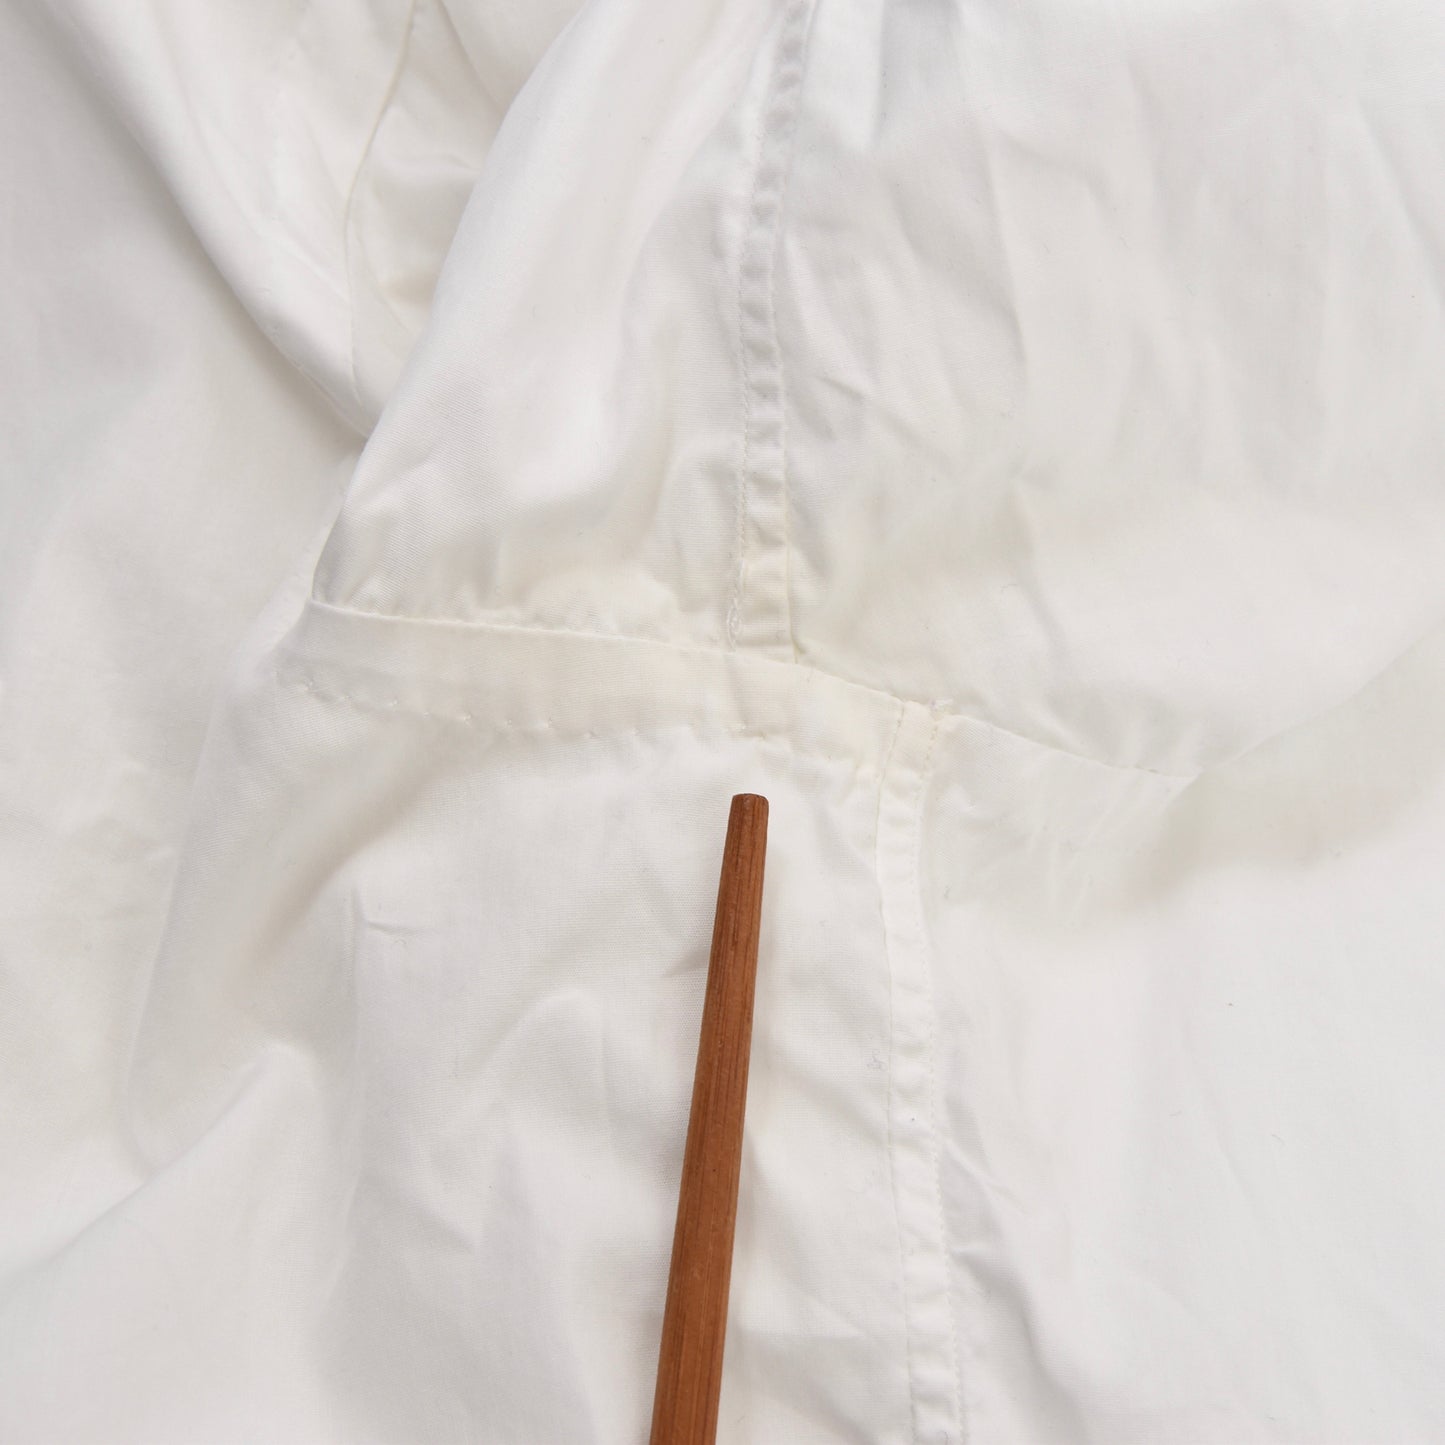 Luigi Borrelli Napoli Baumwollhemd Größe 41/16 - Weiß